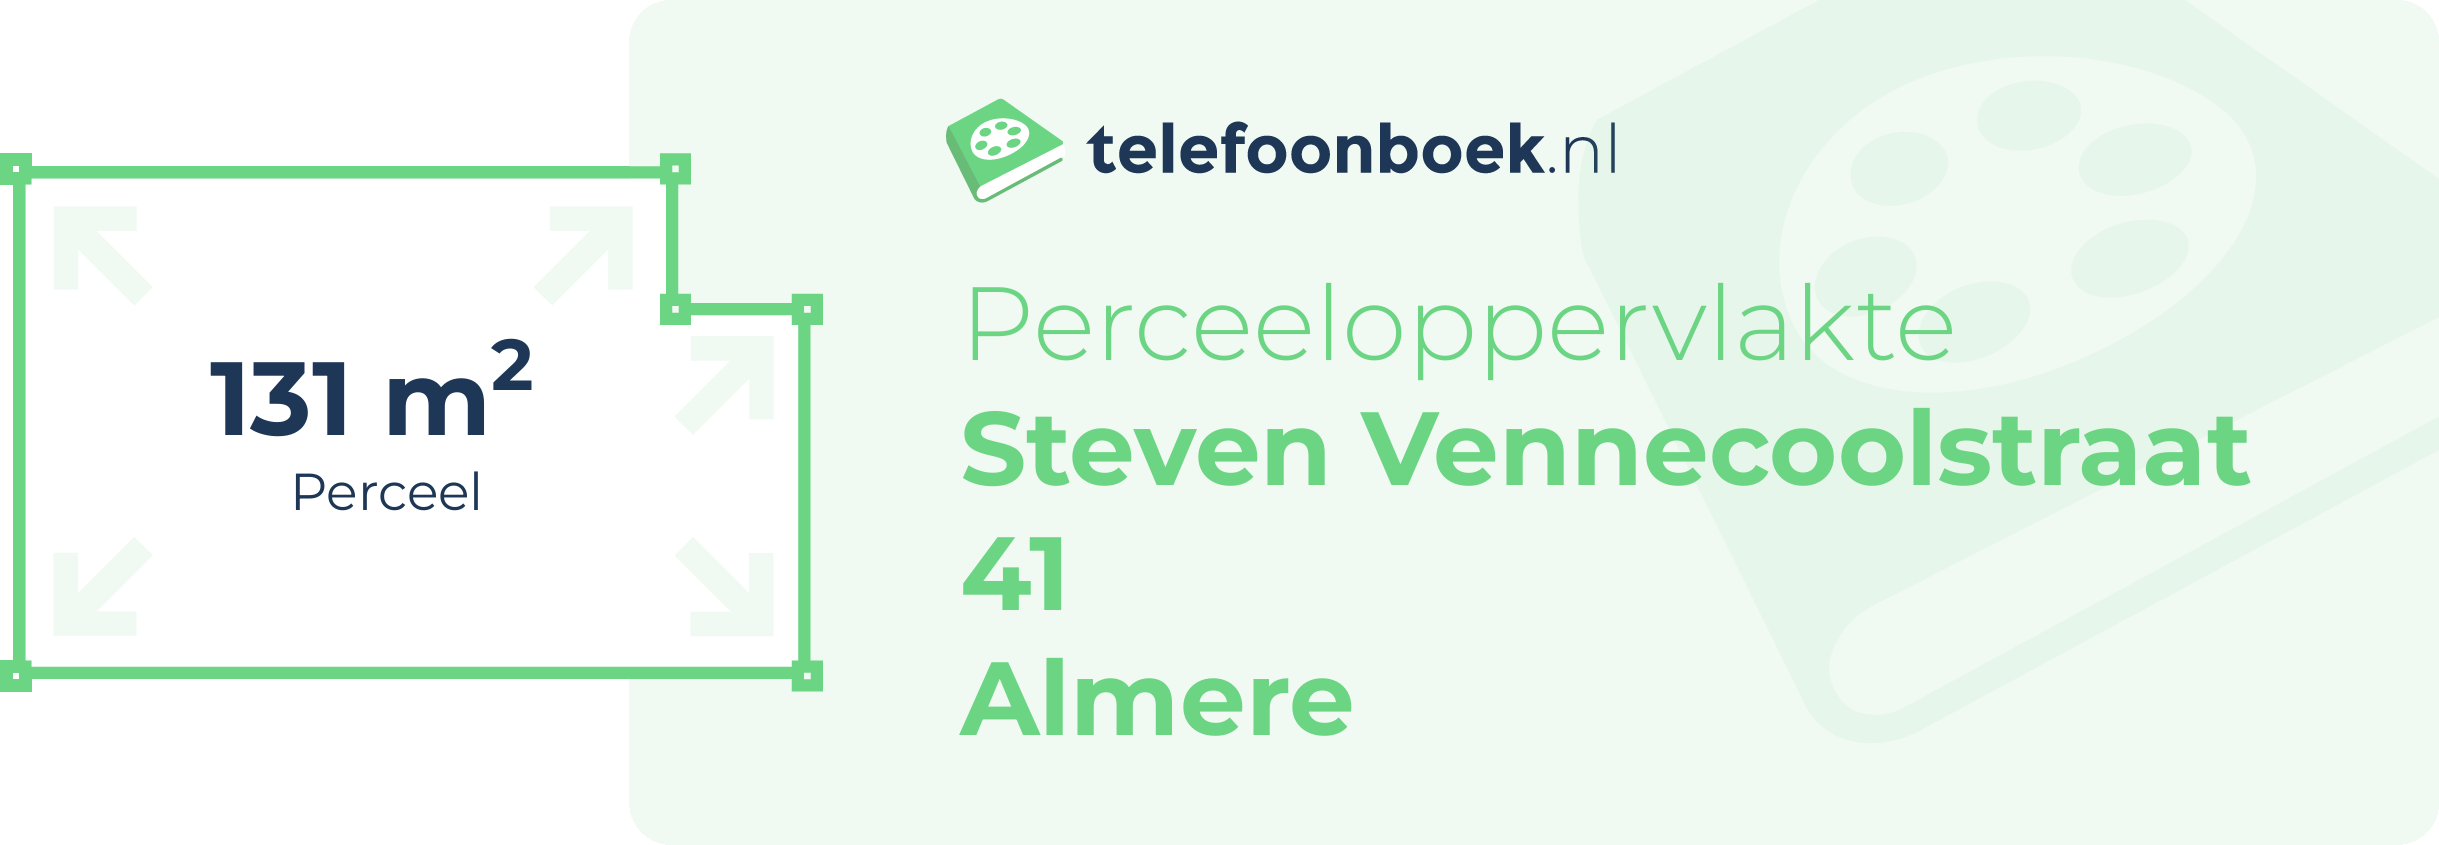 Perceeloppervlakte Steven Vennecoolstraat 41 Almere